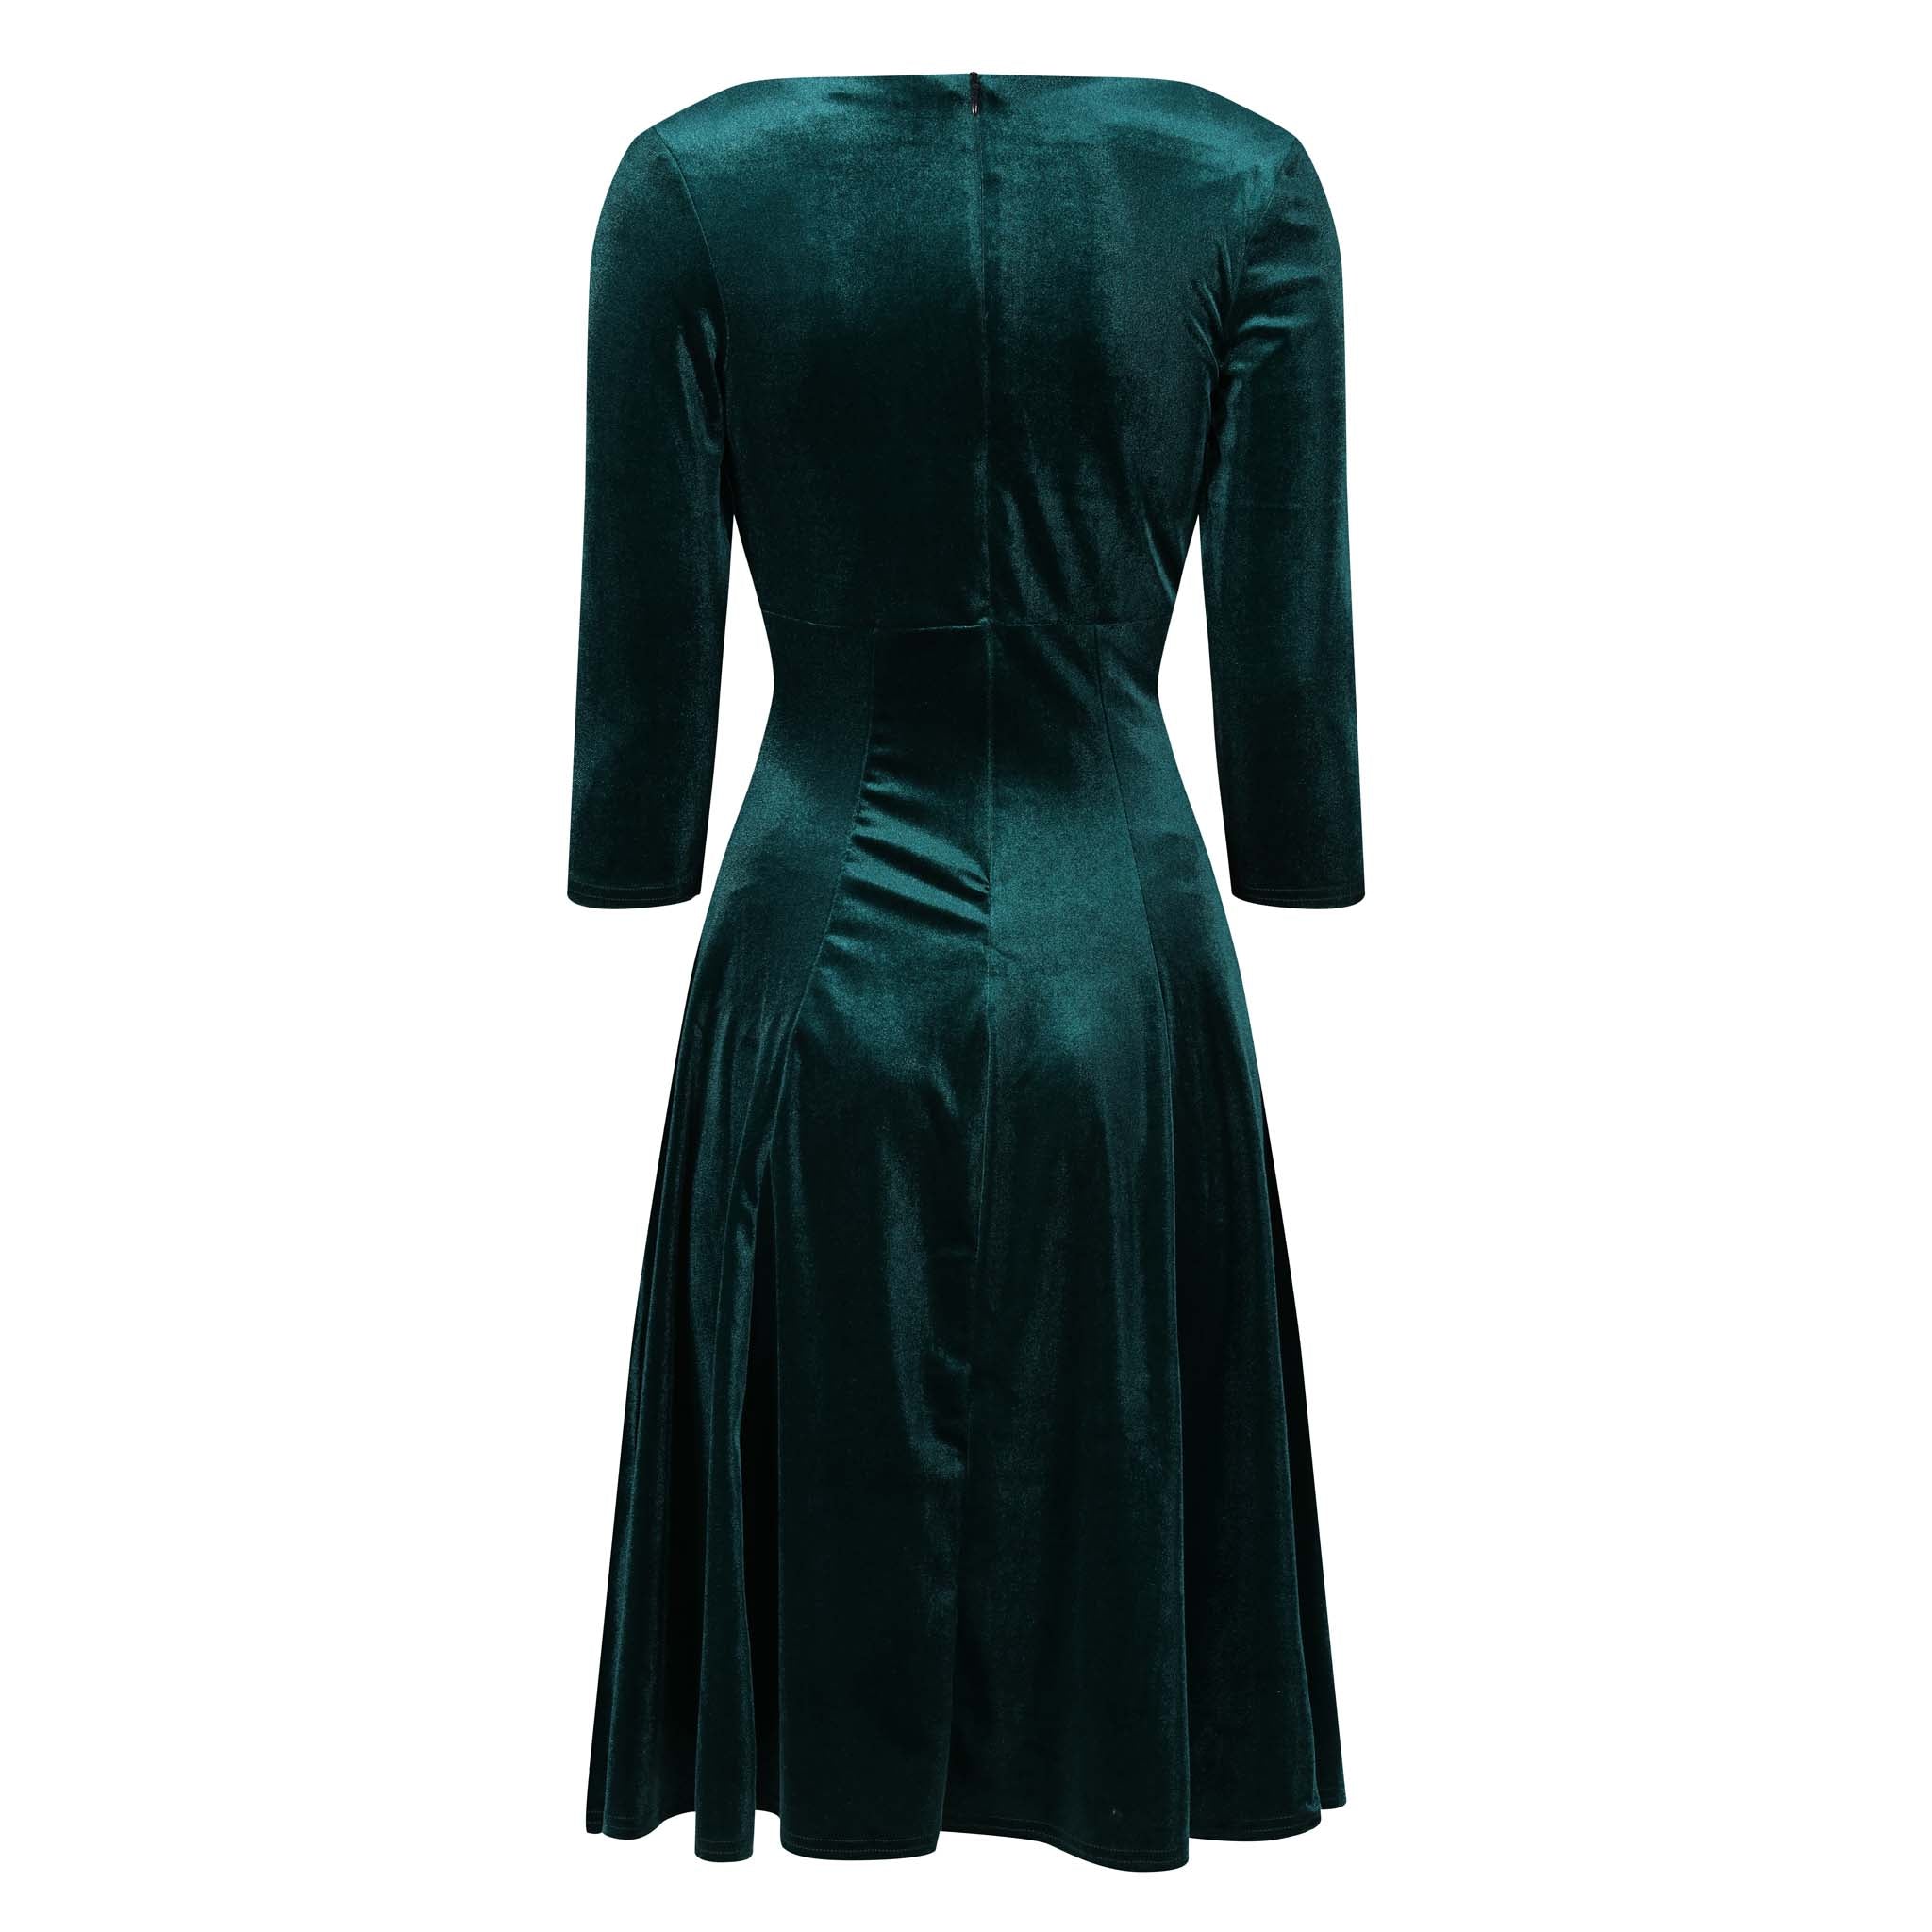 Emerald Green Velour 3/4 Sleeve Vintage Swing Dress